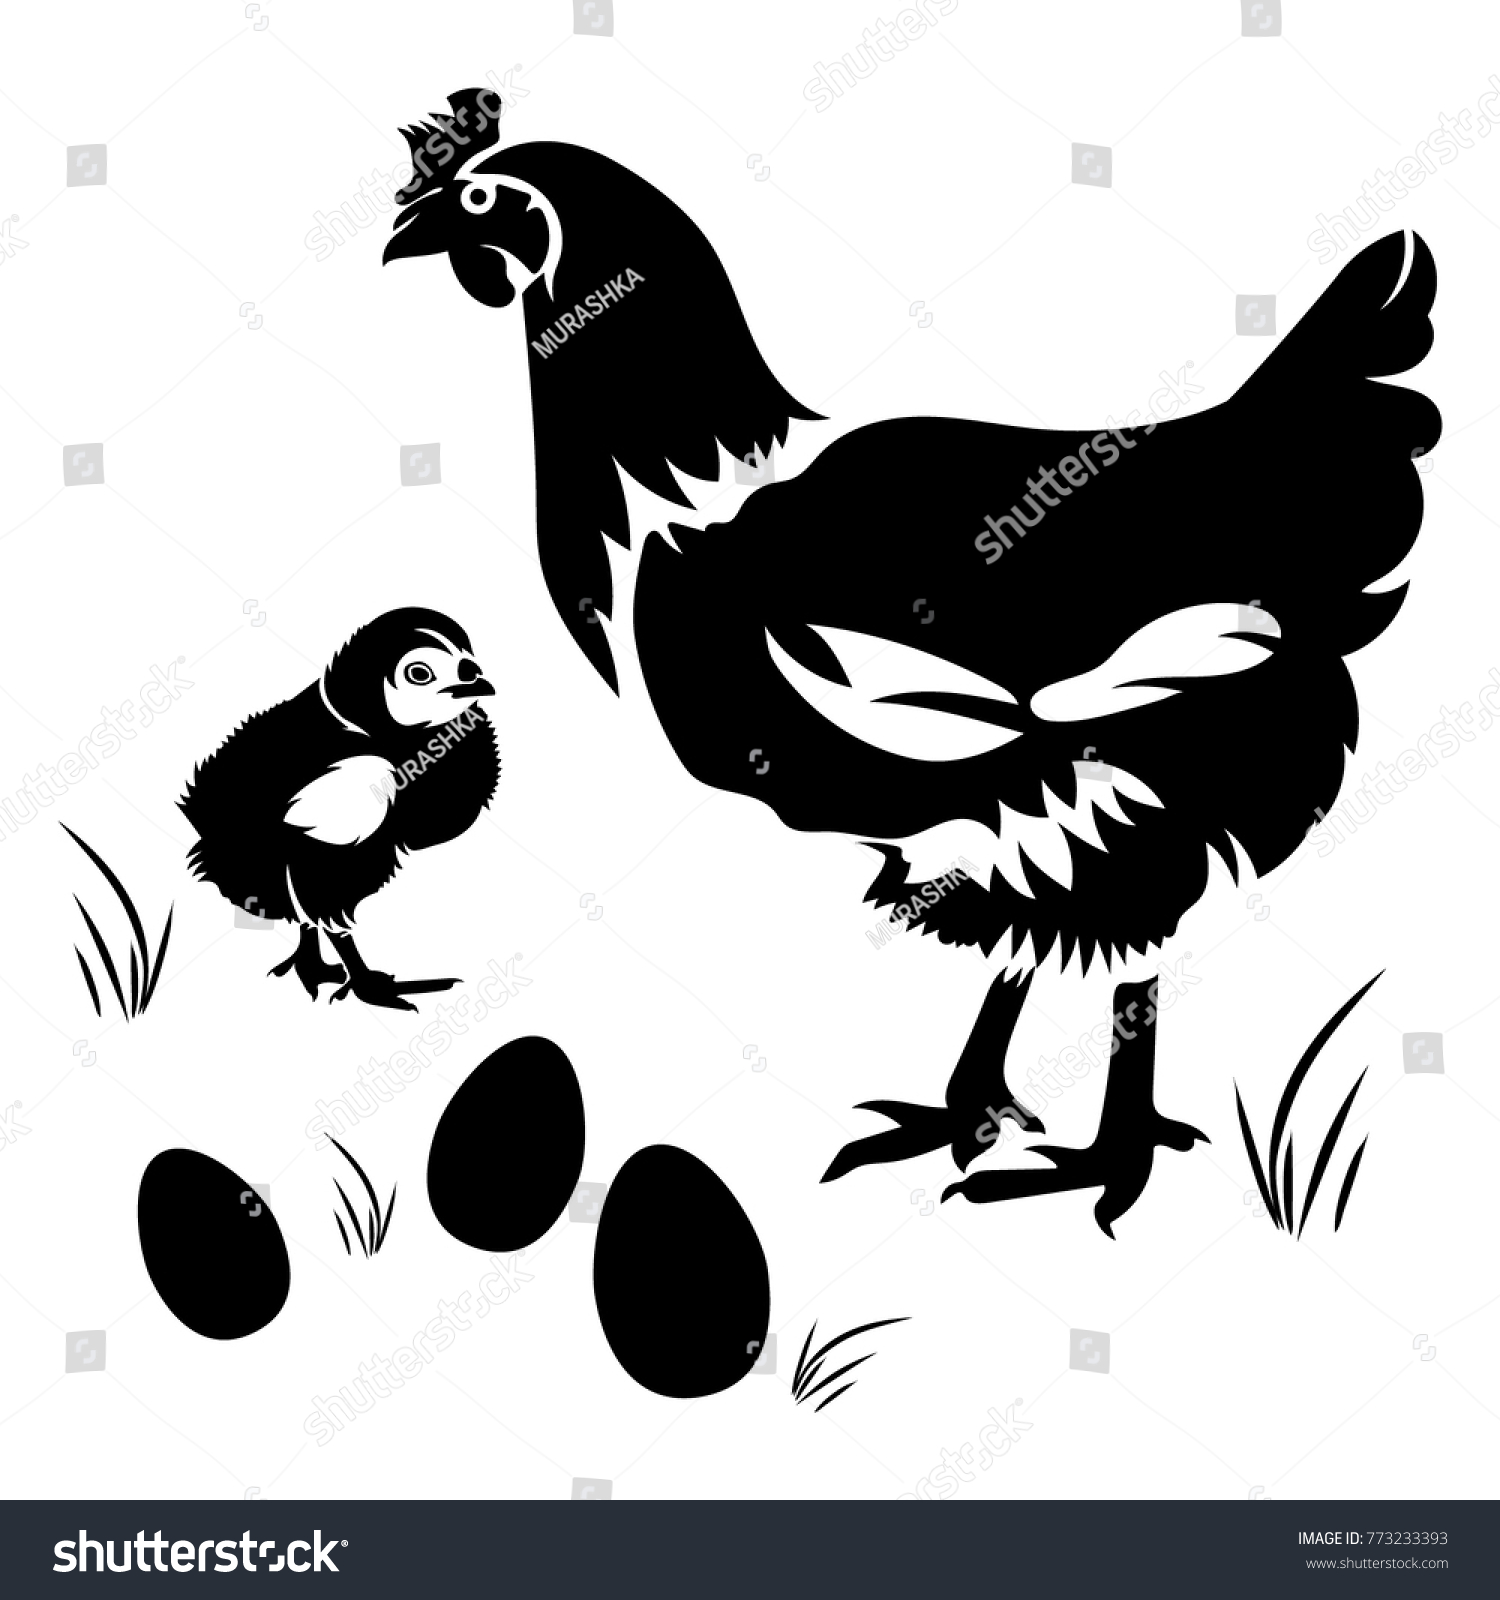 Vector Flat Illustration Black Silhouette Chicken Stock Vector Royalty Free 773233393